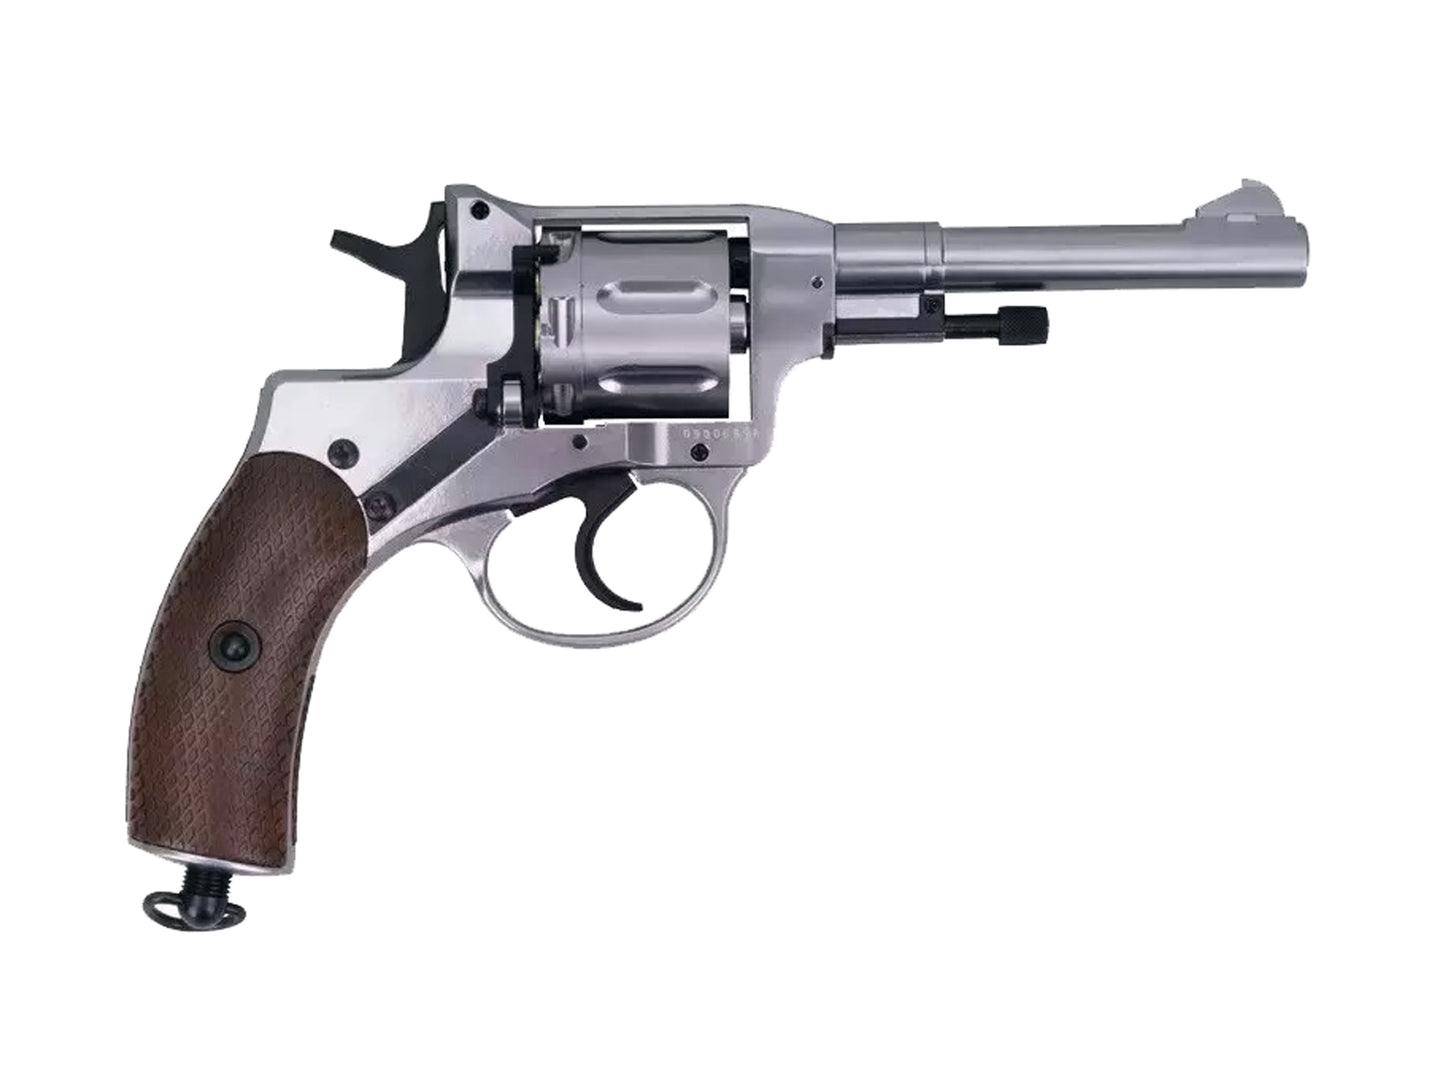 GUN HEAVEN ナガン NAGANT M1895 4インチ CO2ガスリボ ルバー メタルパーツ セット.